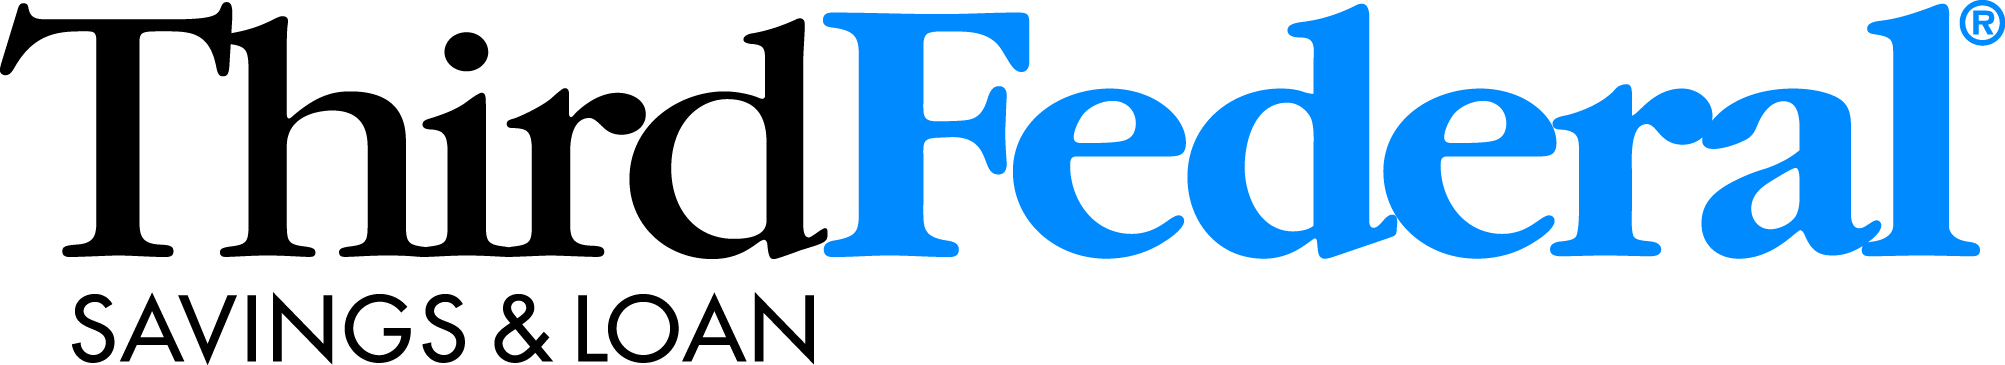 Third Federal logo 2020